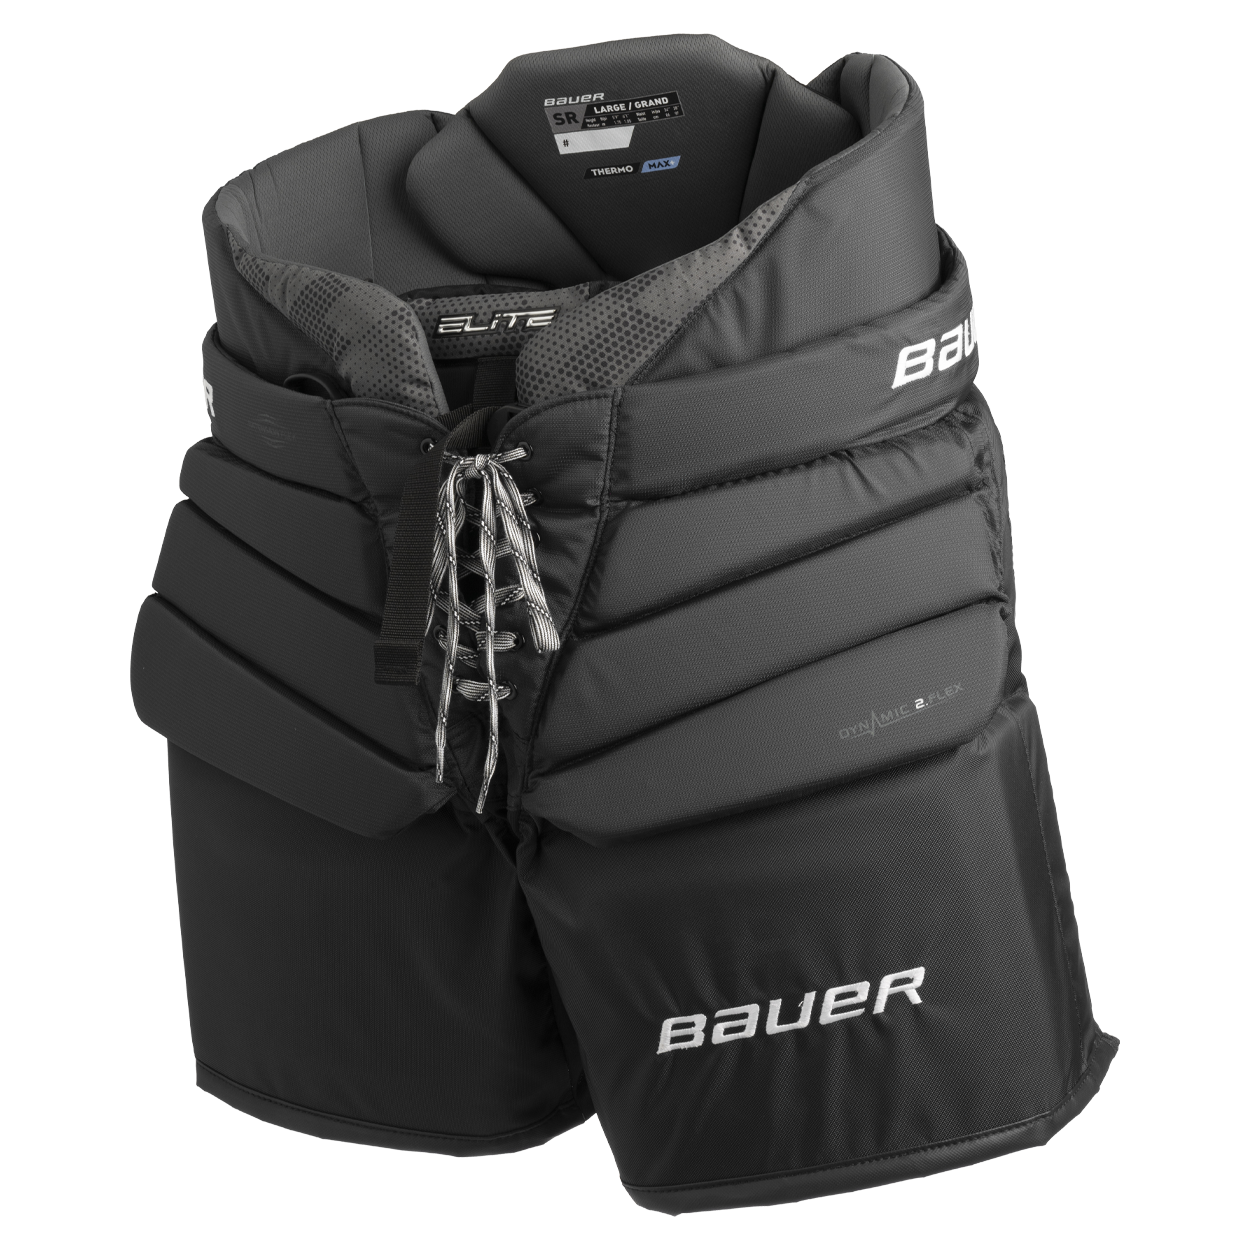 New BAUER X HOCKEY PANTS JUNIOR LARGE BLACK Ice Hockey / Pants